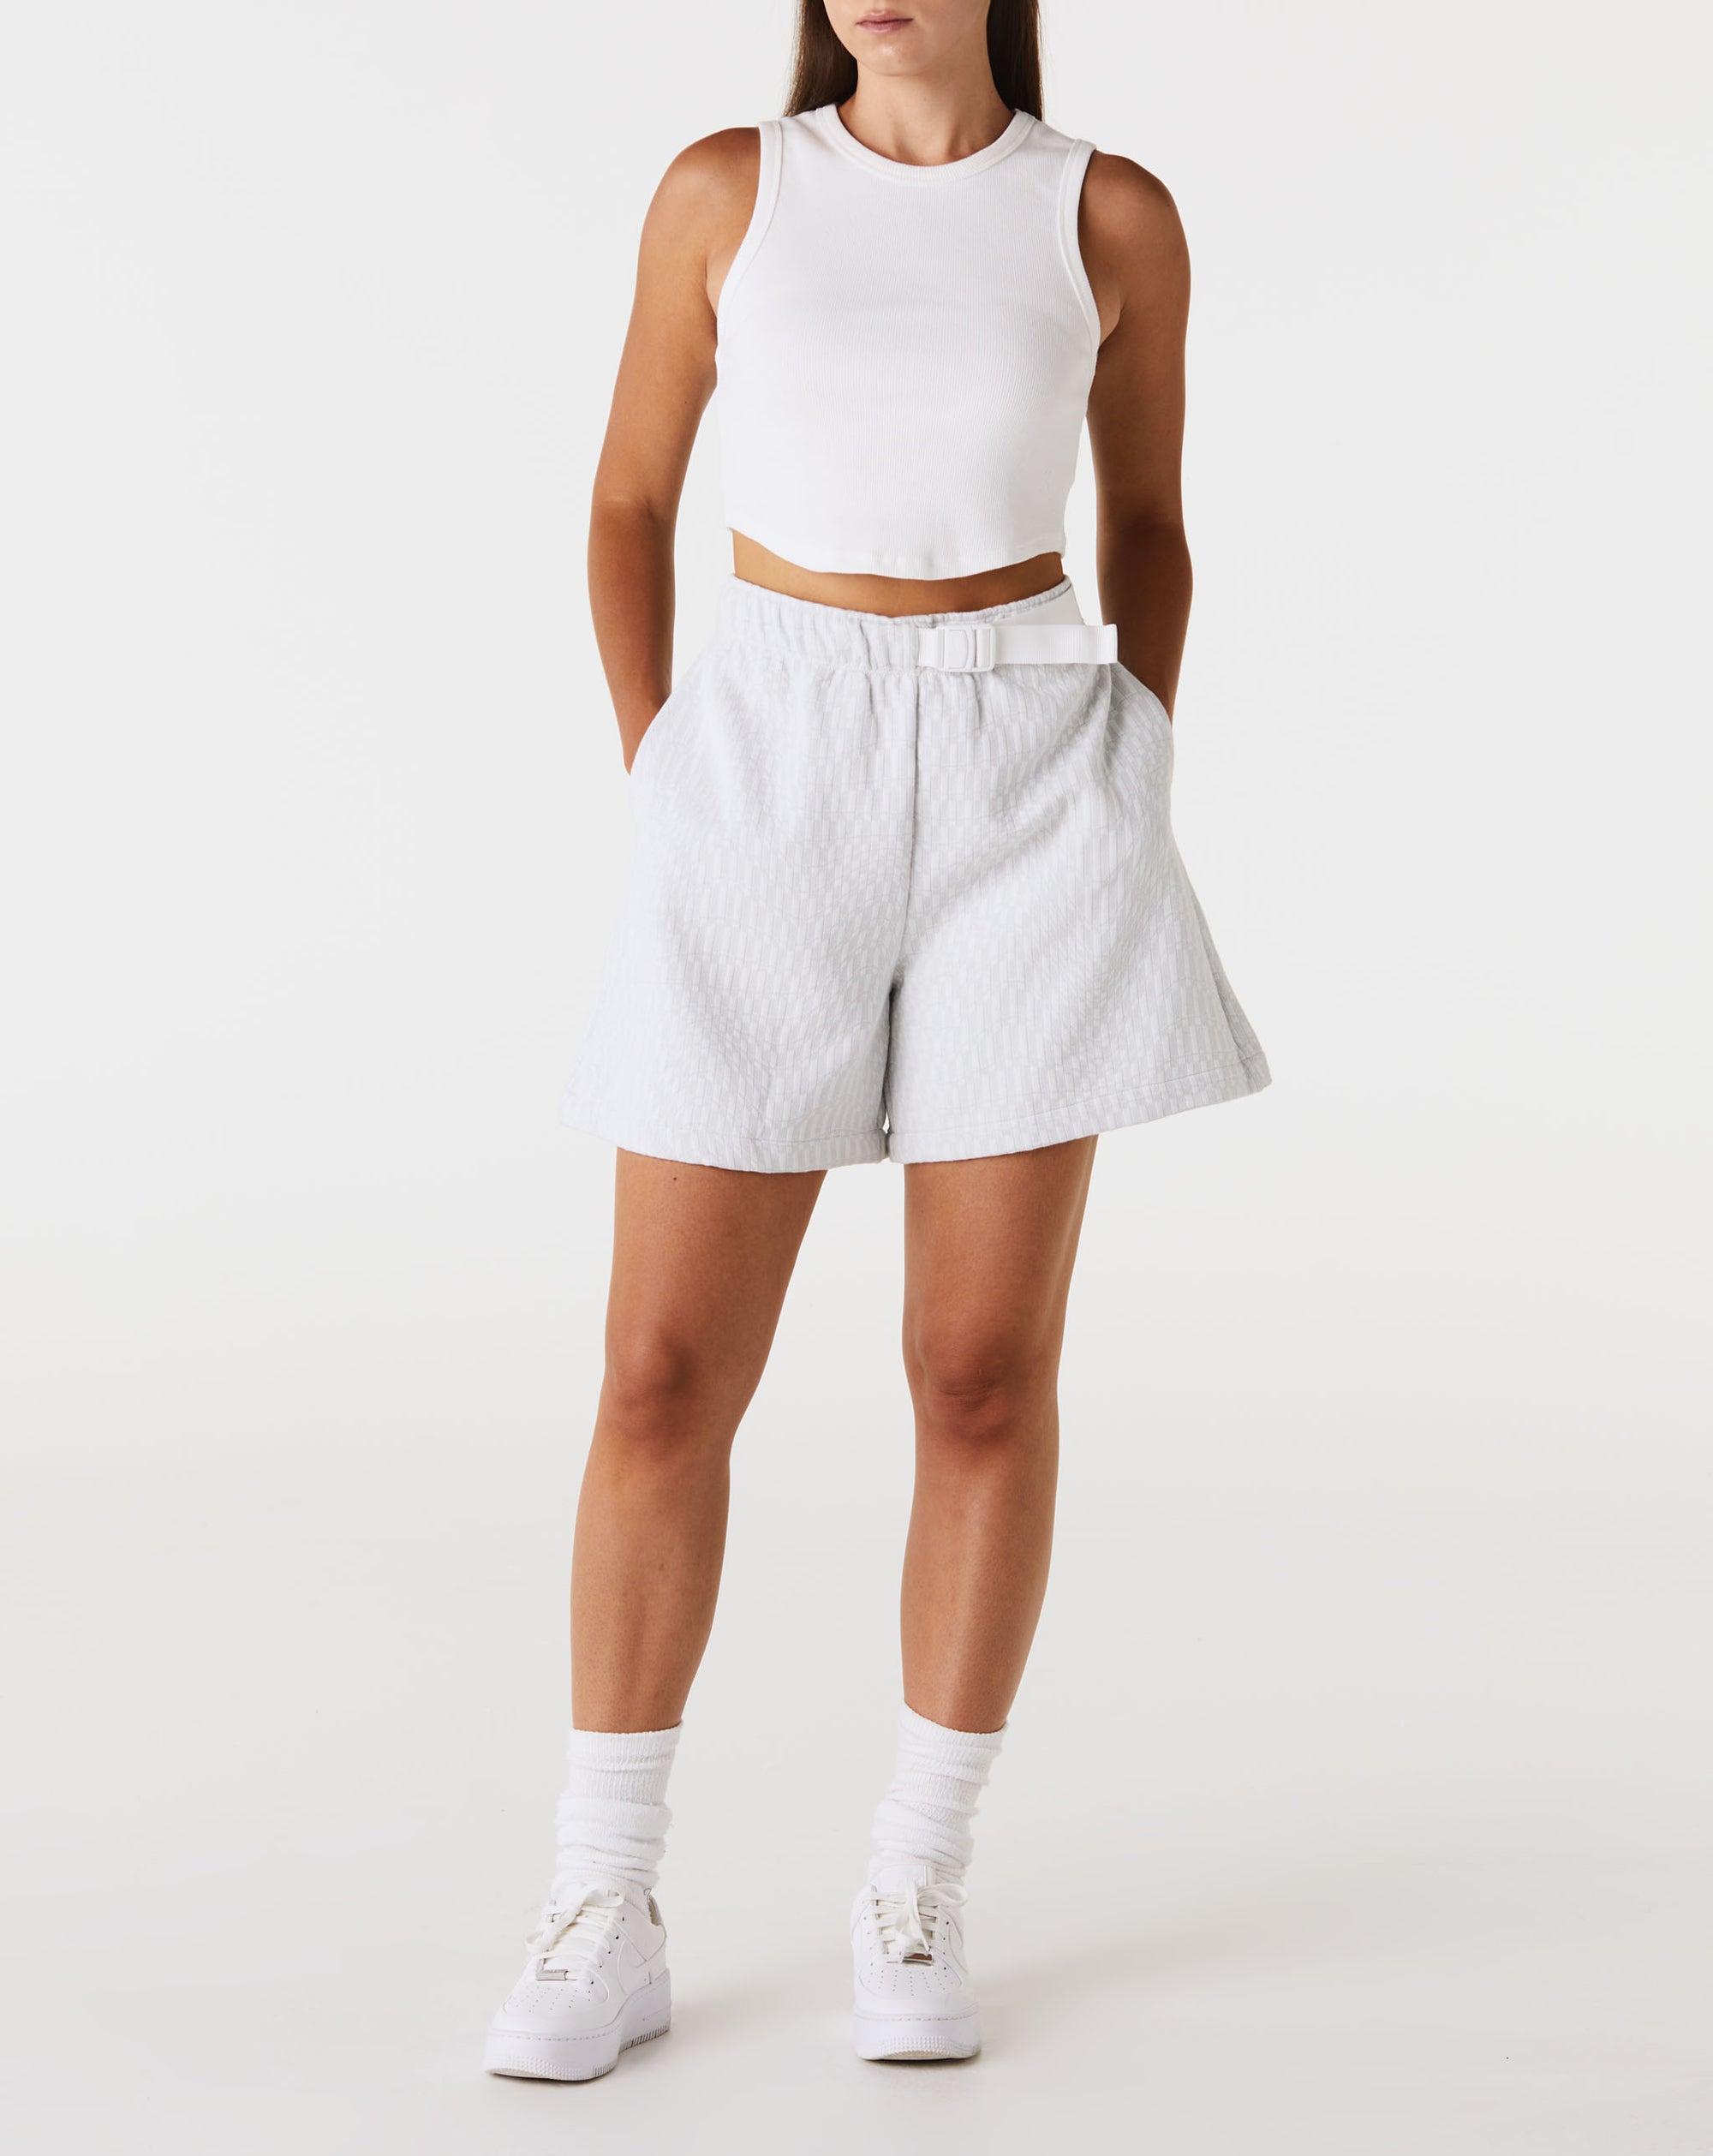 Nike Women's Tech Pack Shorts - Rule of Next Apparel